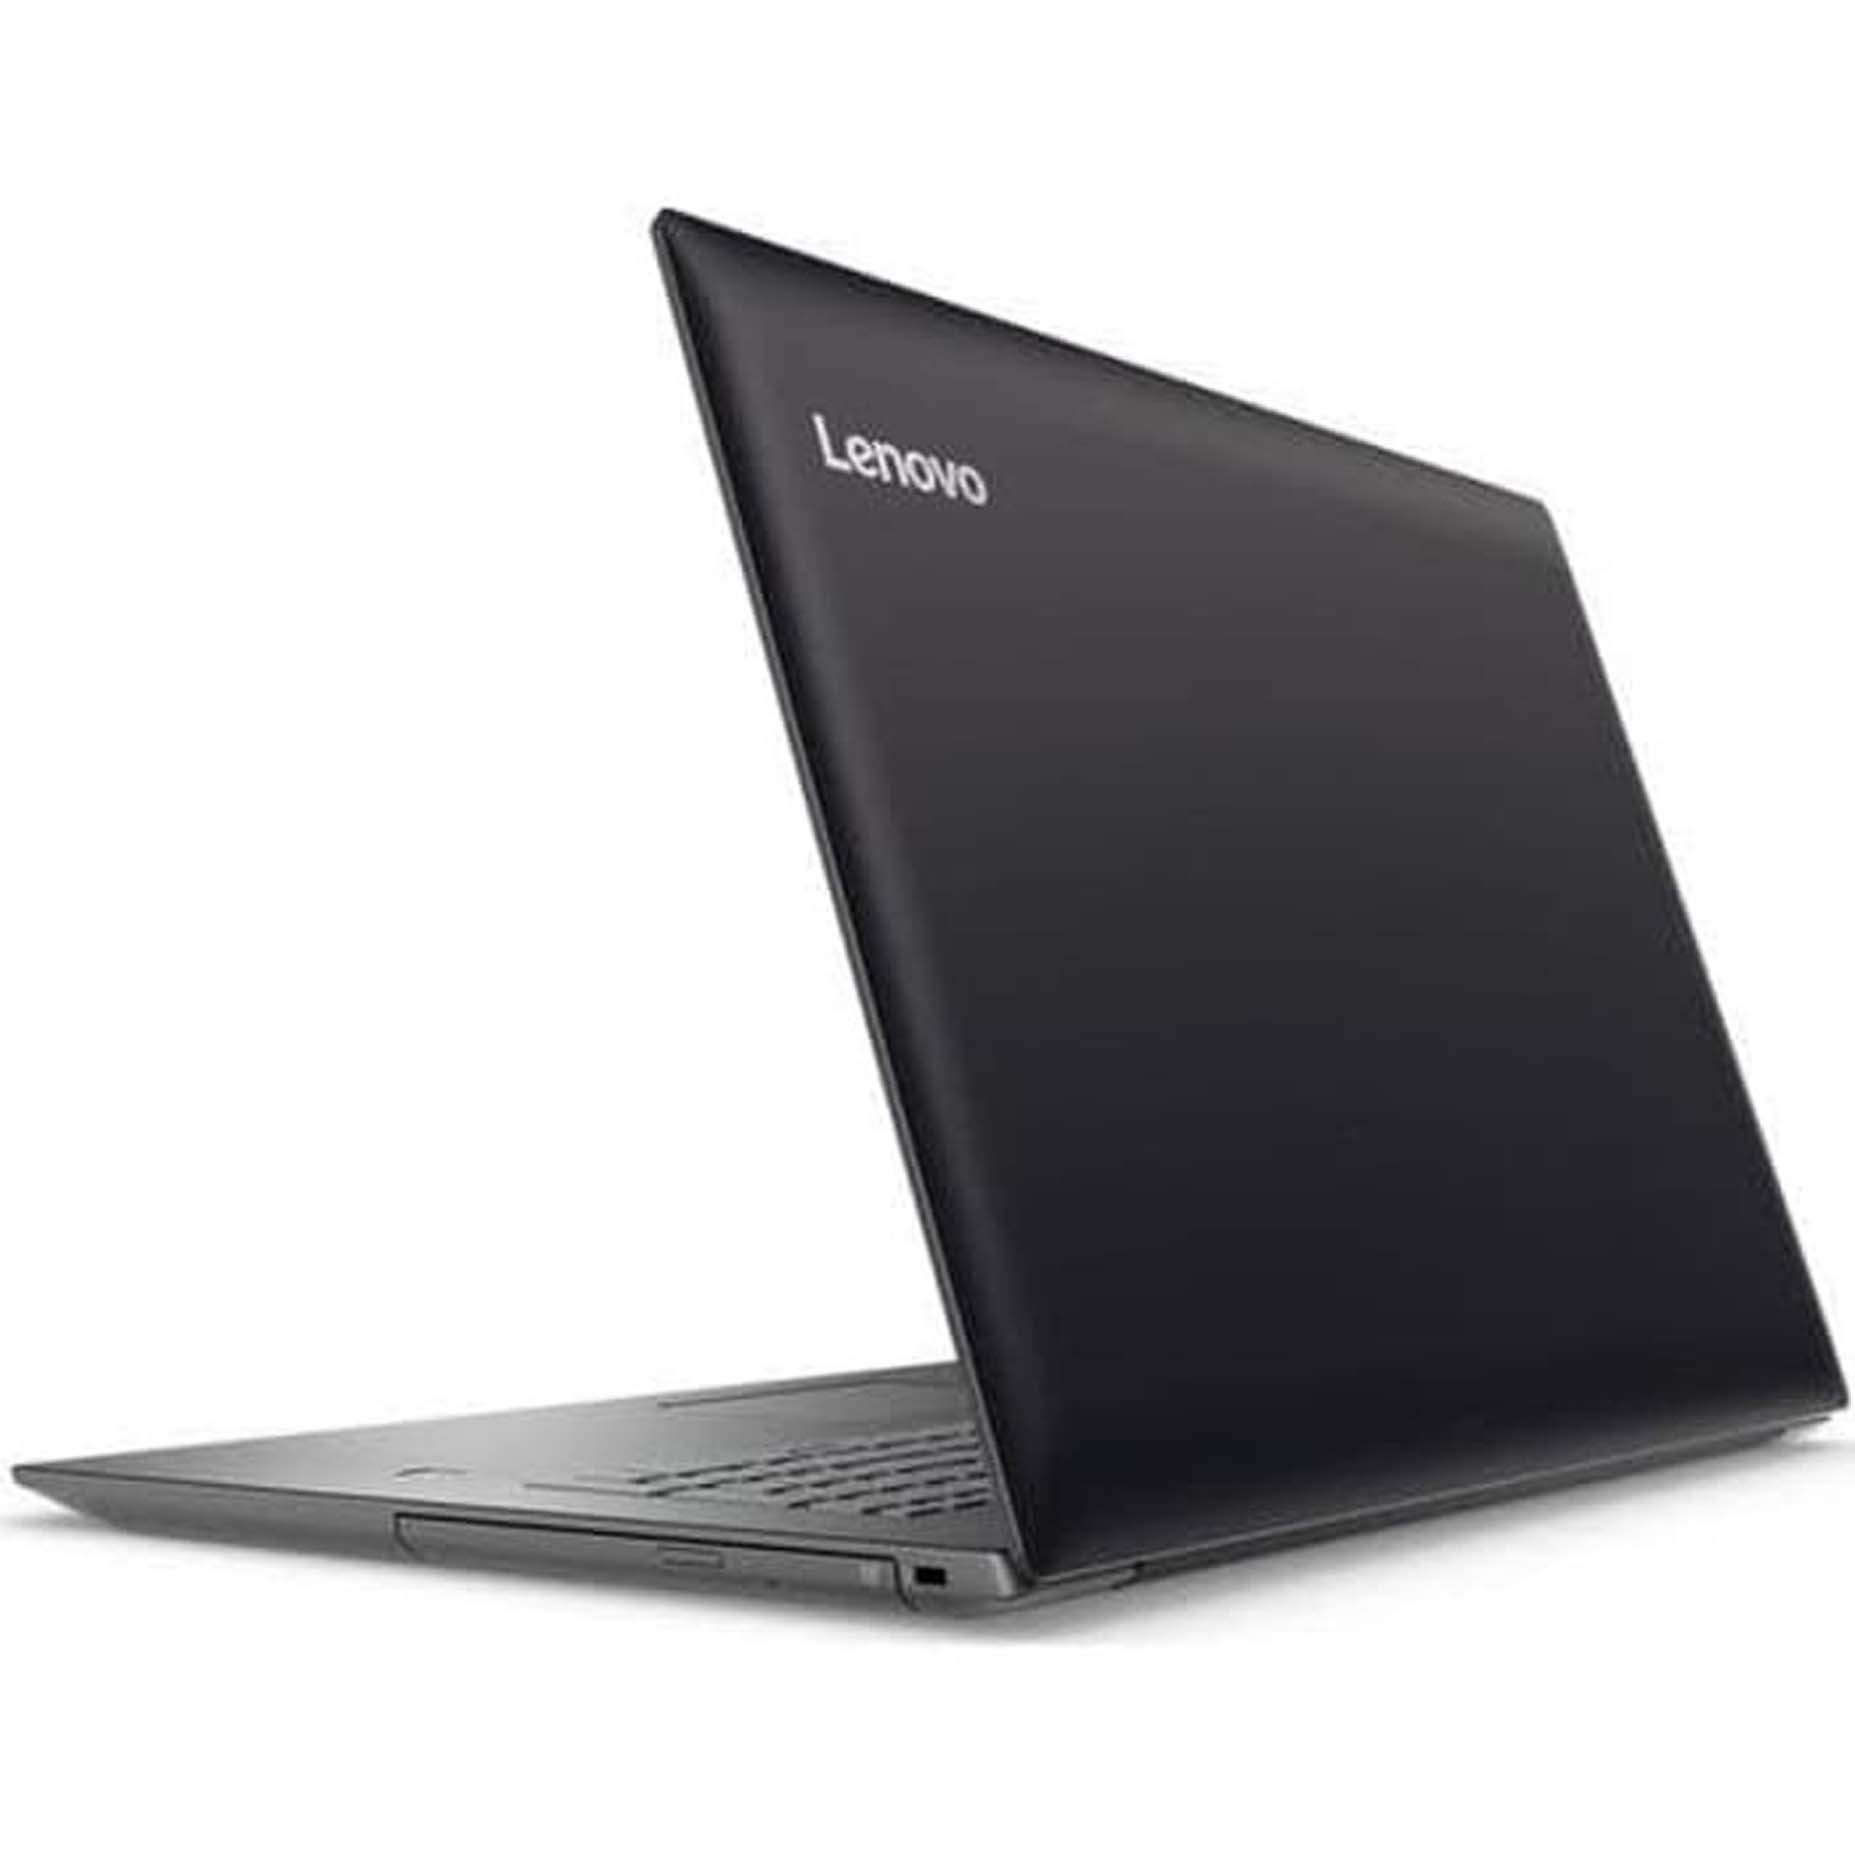 Harga Lenovo Ideapad IP330-14IKBR 9EID Laptop Intel Core i3-7020 4GB 1TB VGA 2GB Windows 10 14 Inch Black